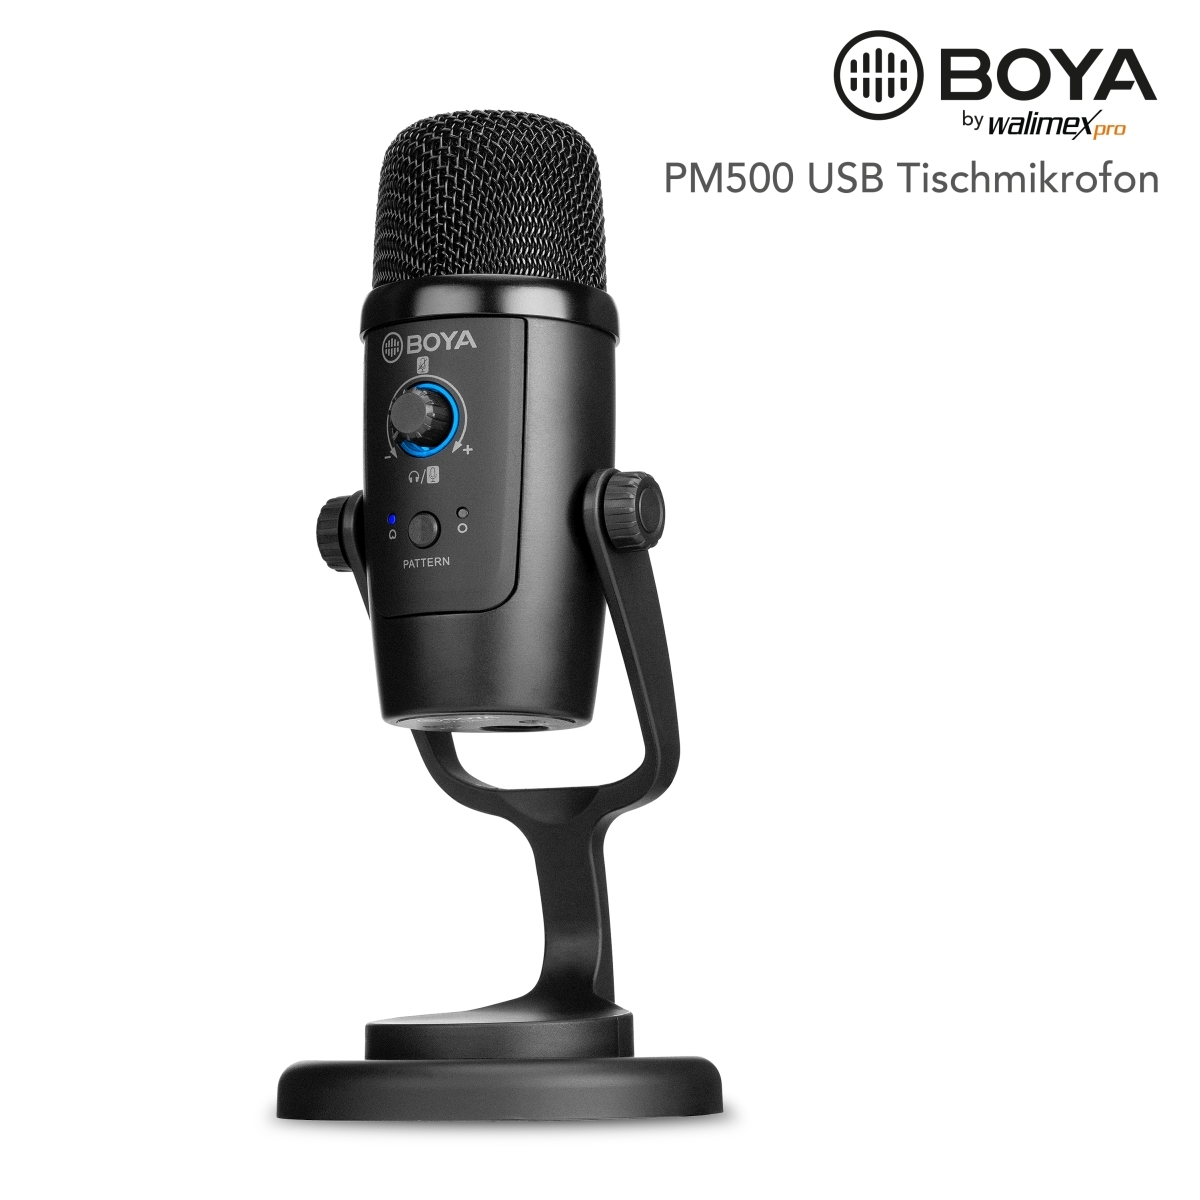 Walimex Pro Boya PM 500 USB Tischmikrofon